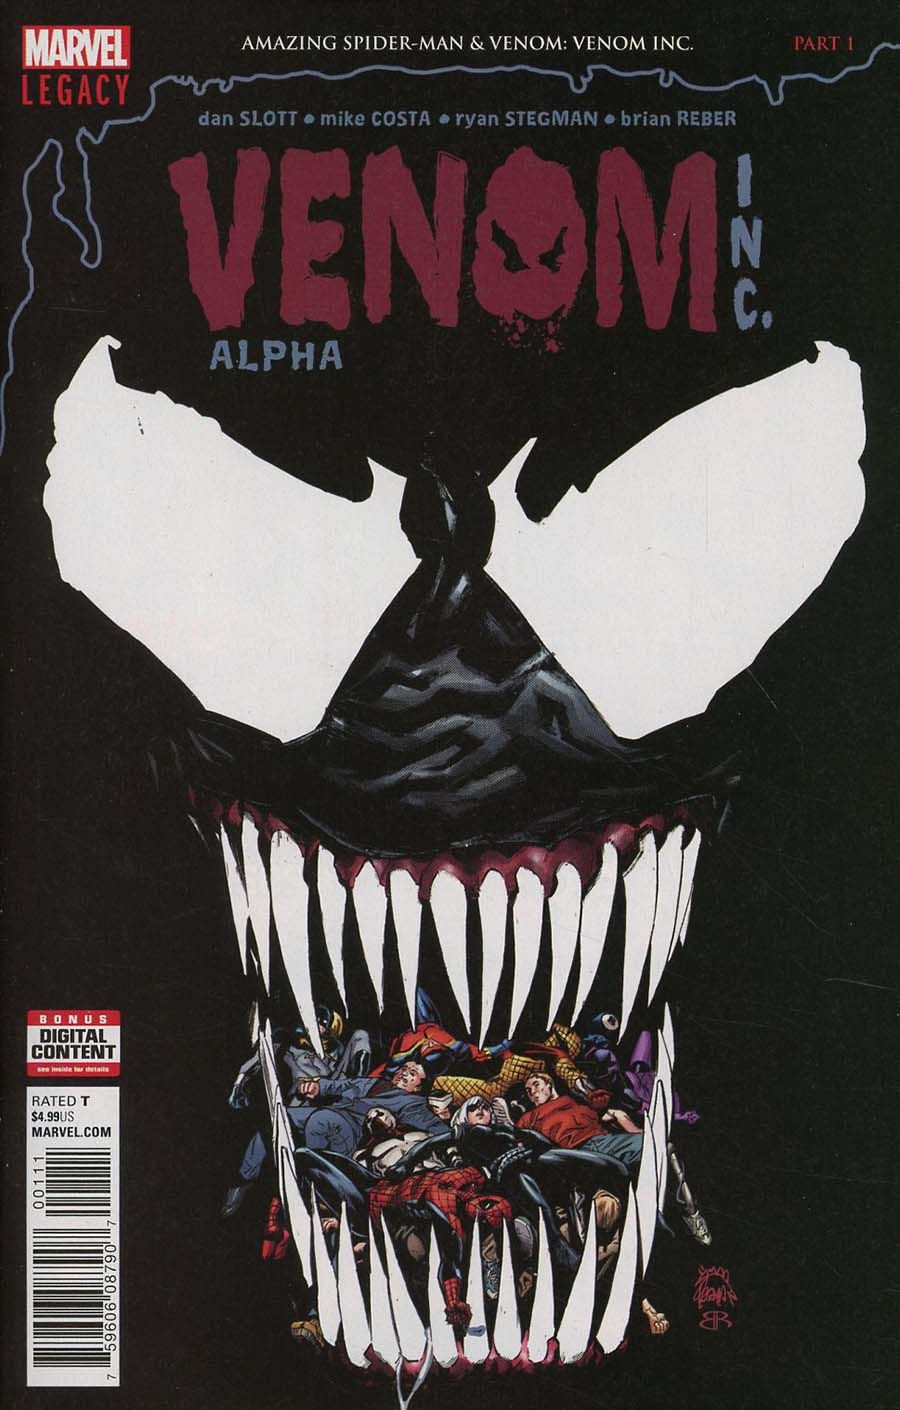 Amazing Spider-Man/Venom: Venom Inc. - Alpha #1 Comic